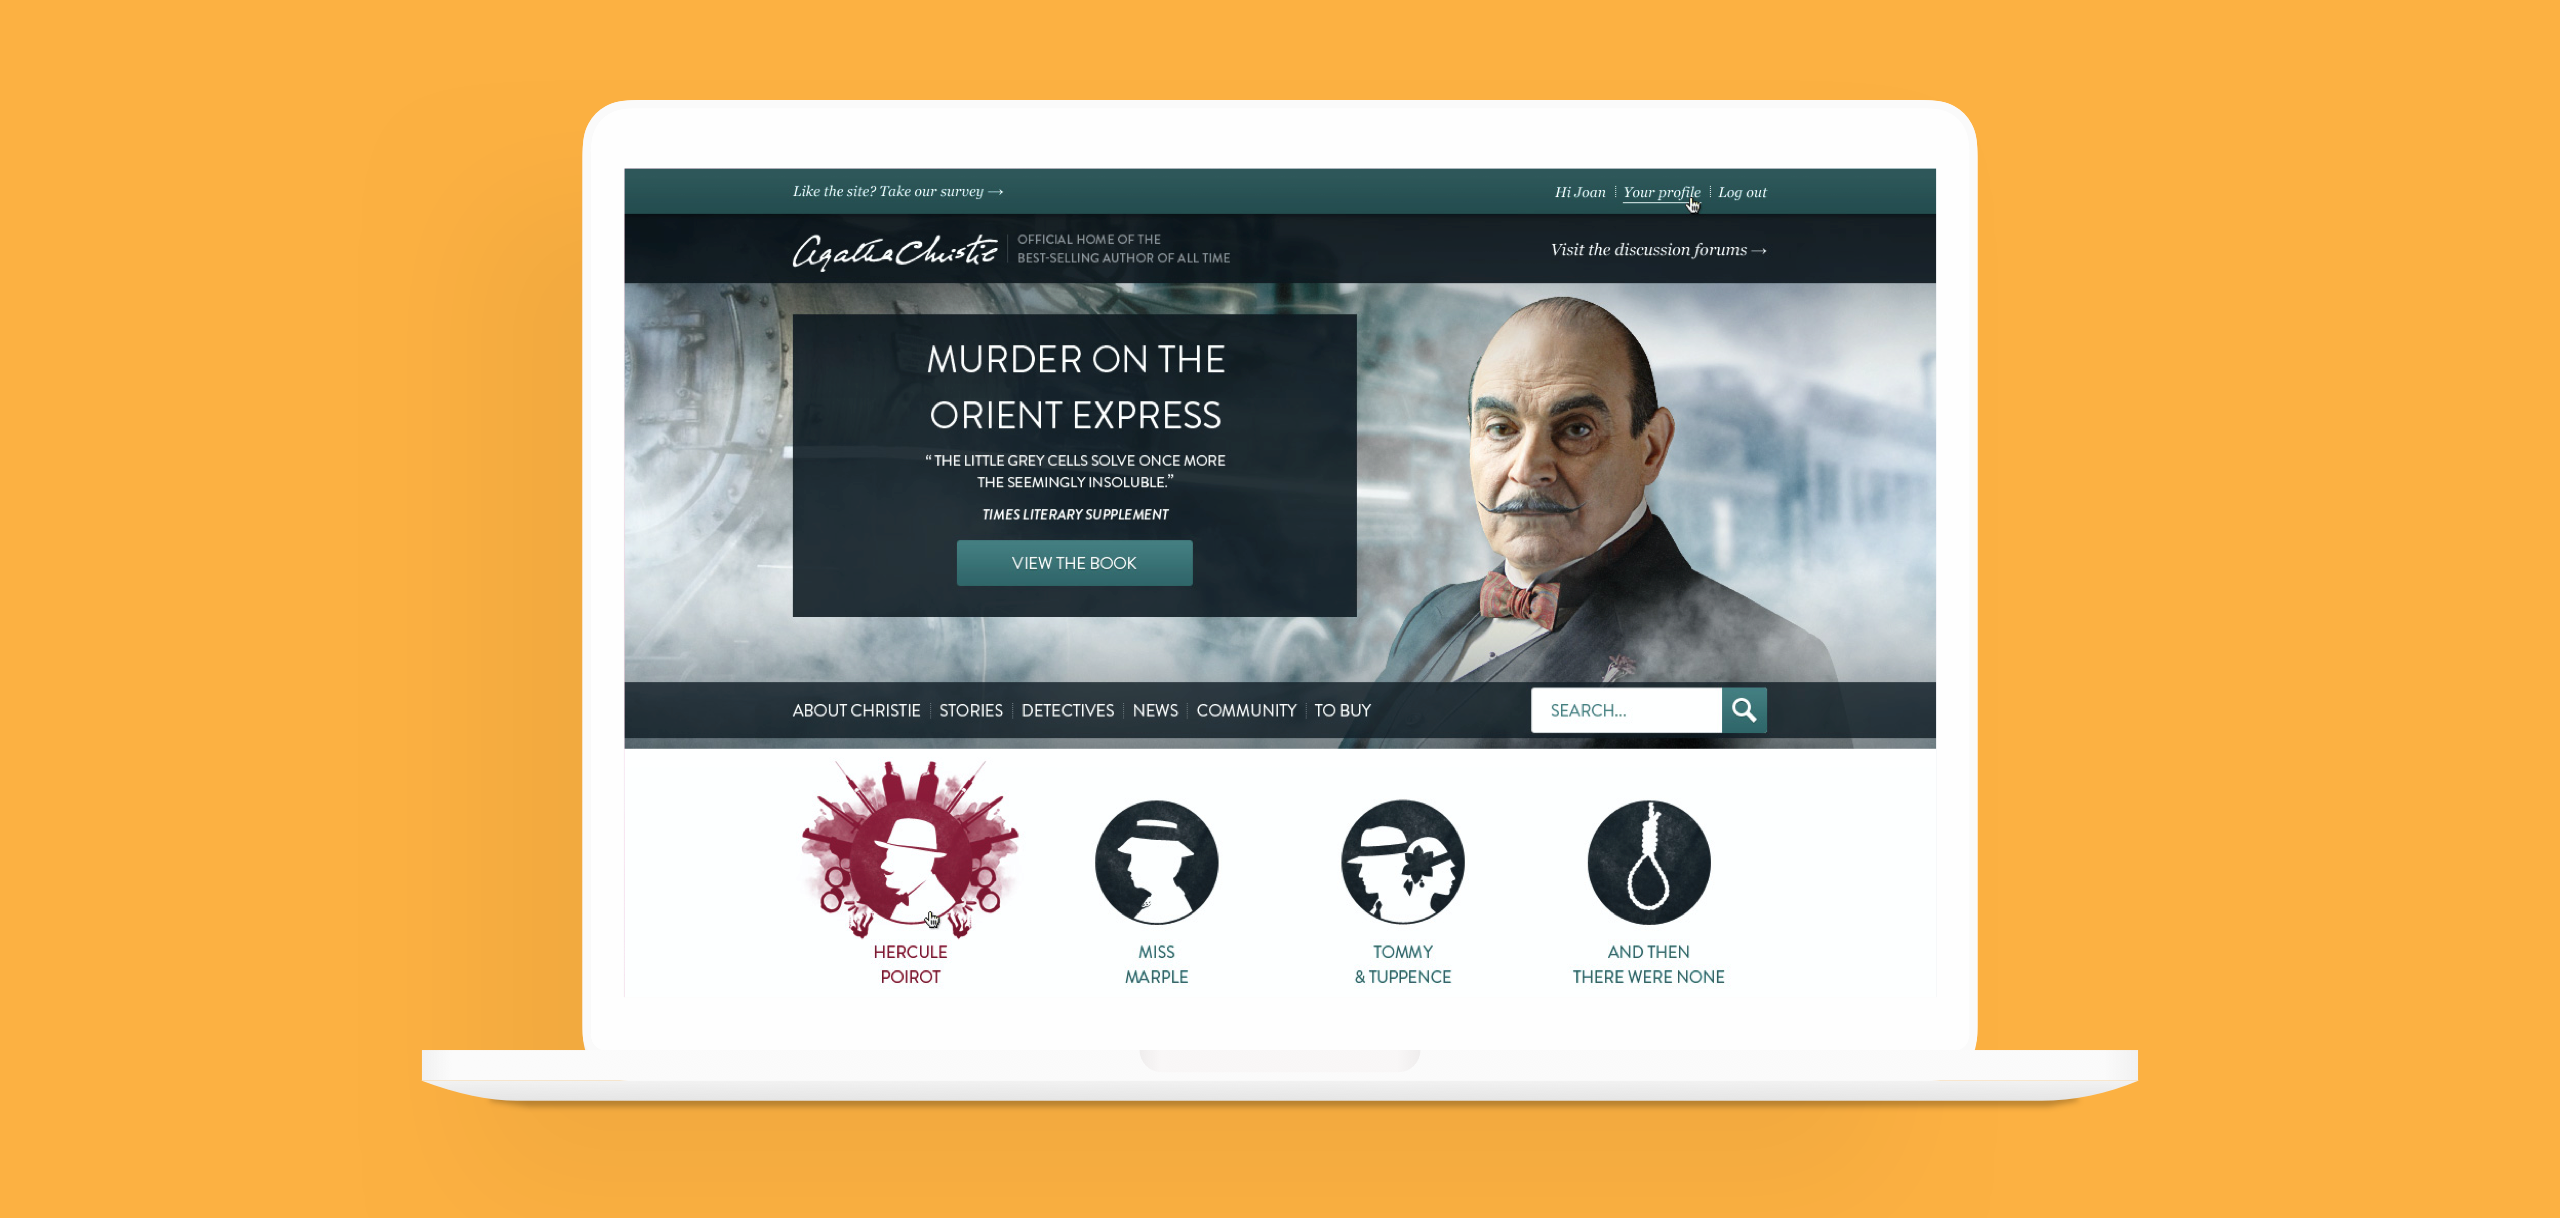 Final website design for Agatha Christie